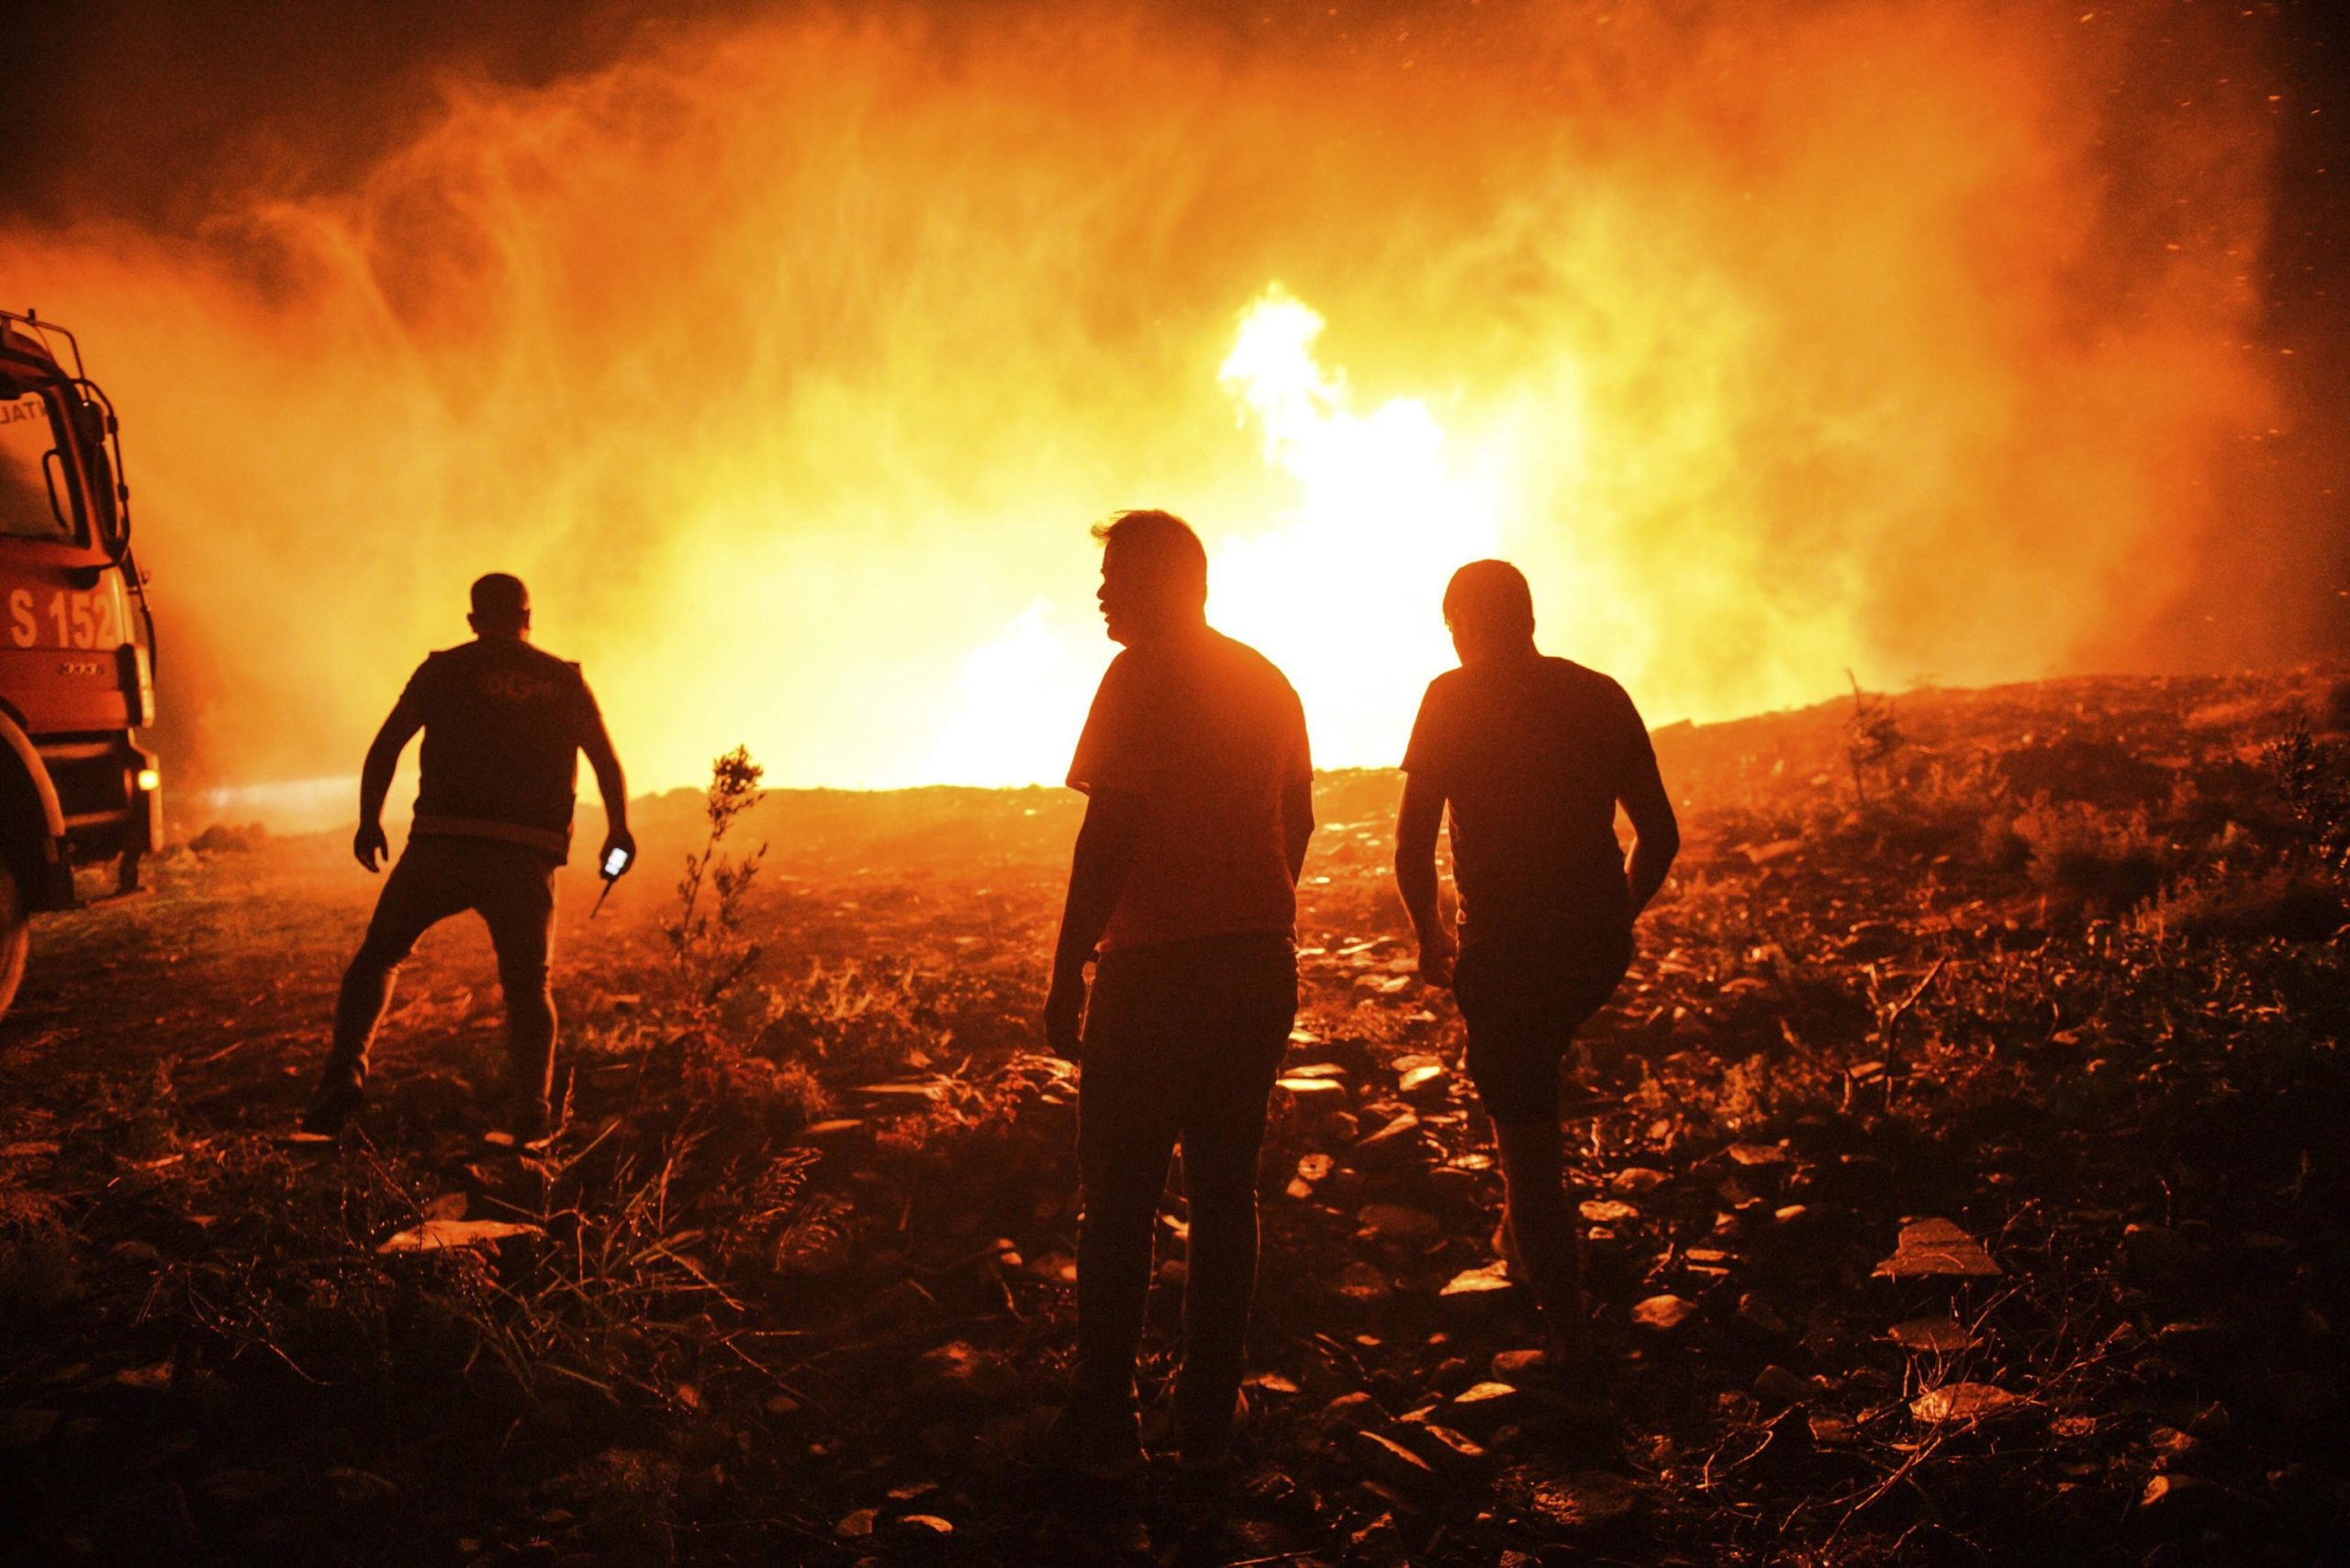 AKP gov’t blamed for poor response to forest fires raging across Turkey 1